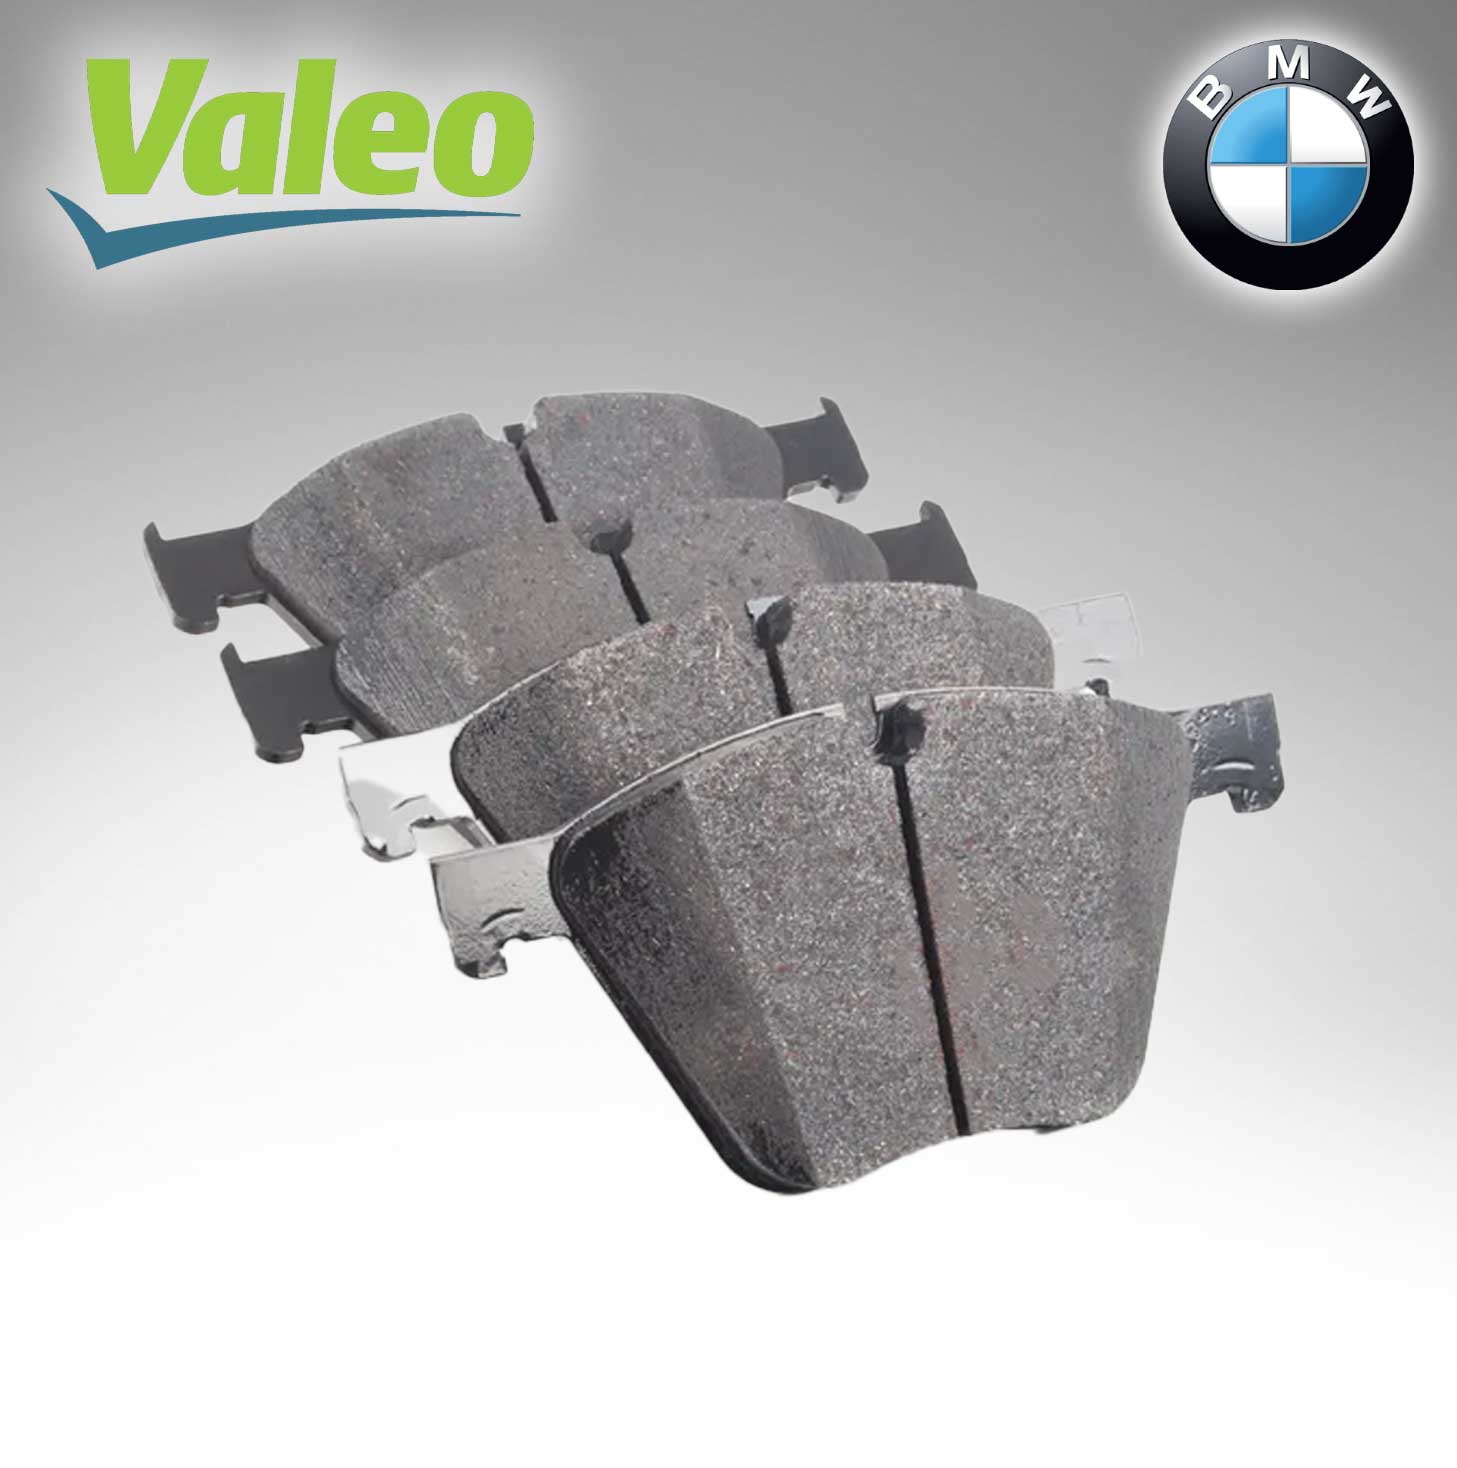 Valeo BRAKE PADS BMW X6 SERIES E71 (Val#671159) 34116783554